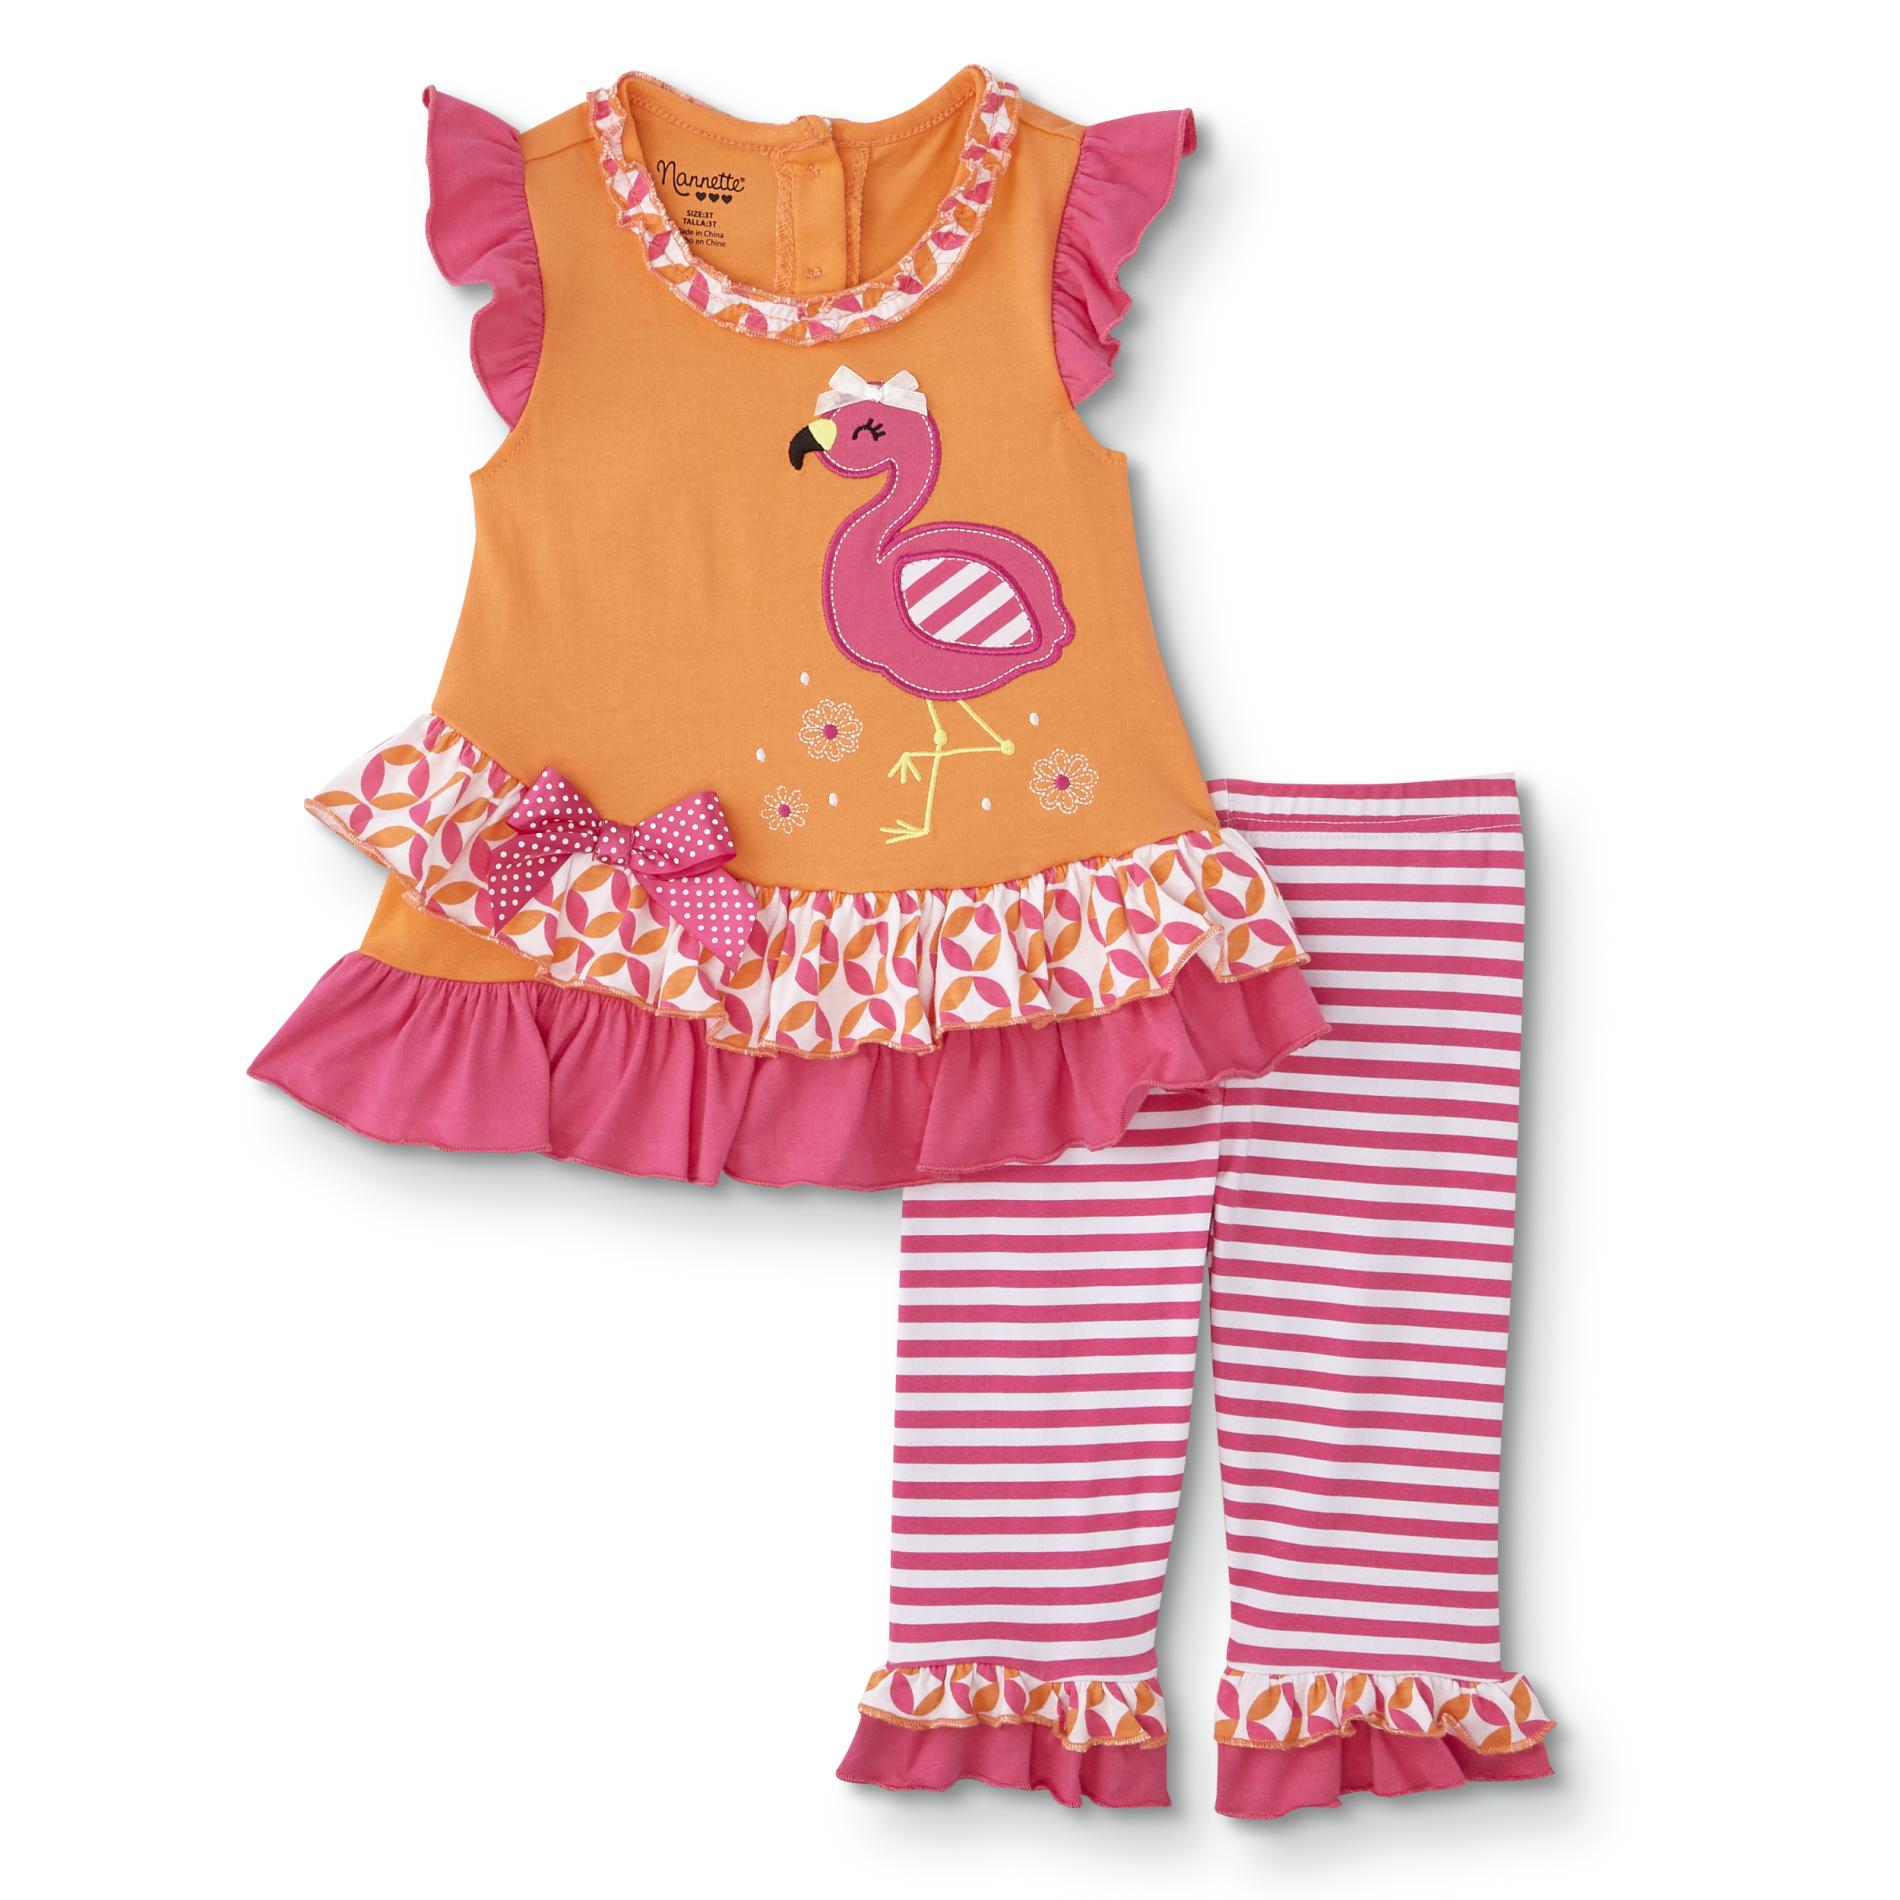 Toddler Girls' Ruffle Tunic & Leggings - Flamingo